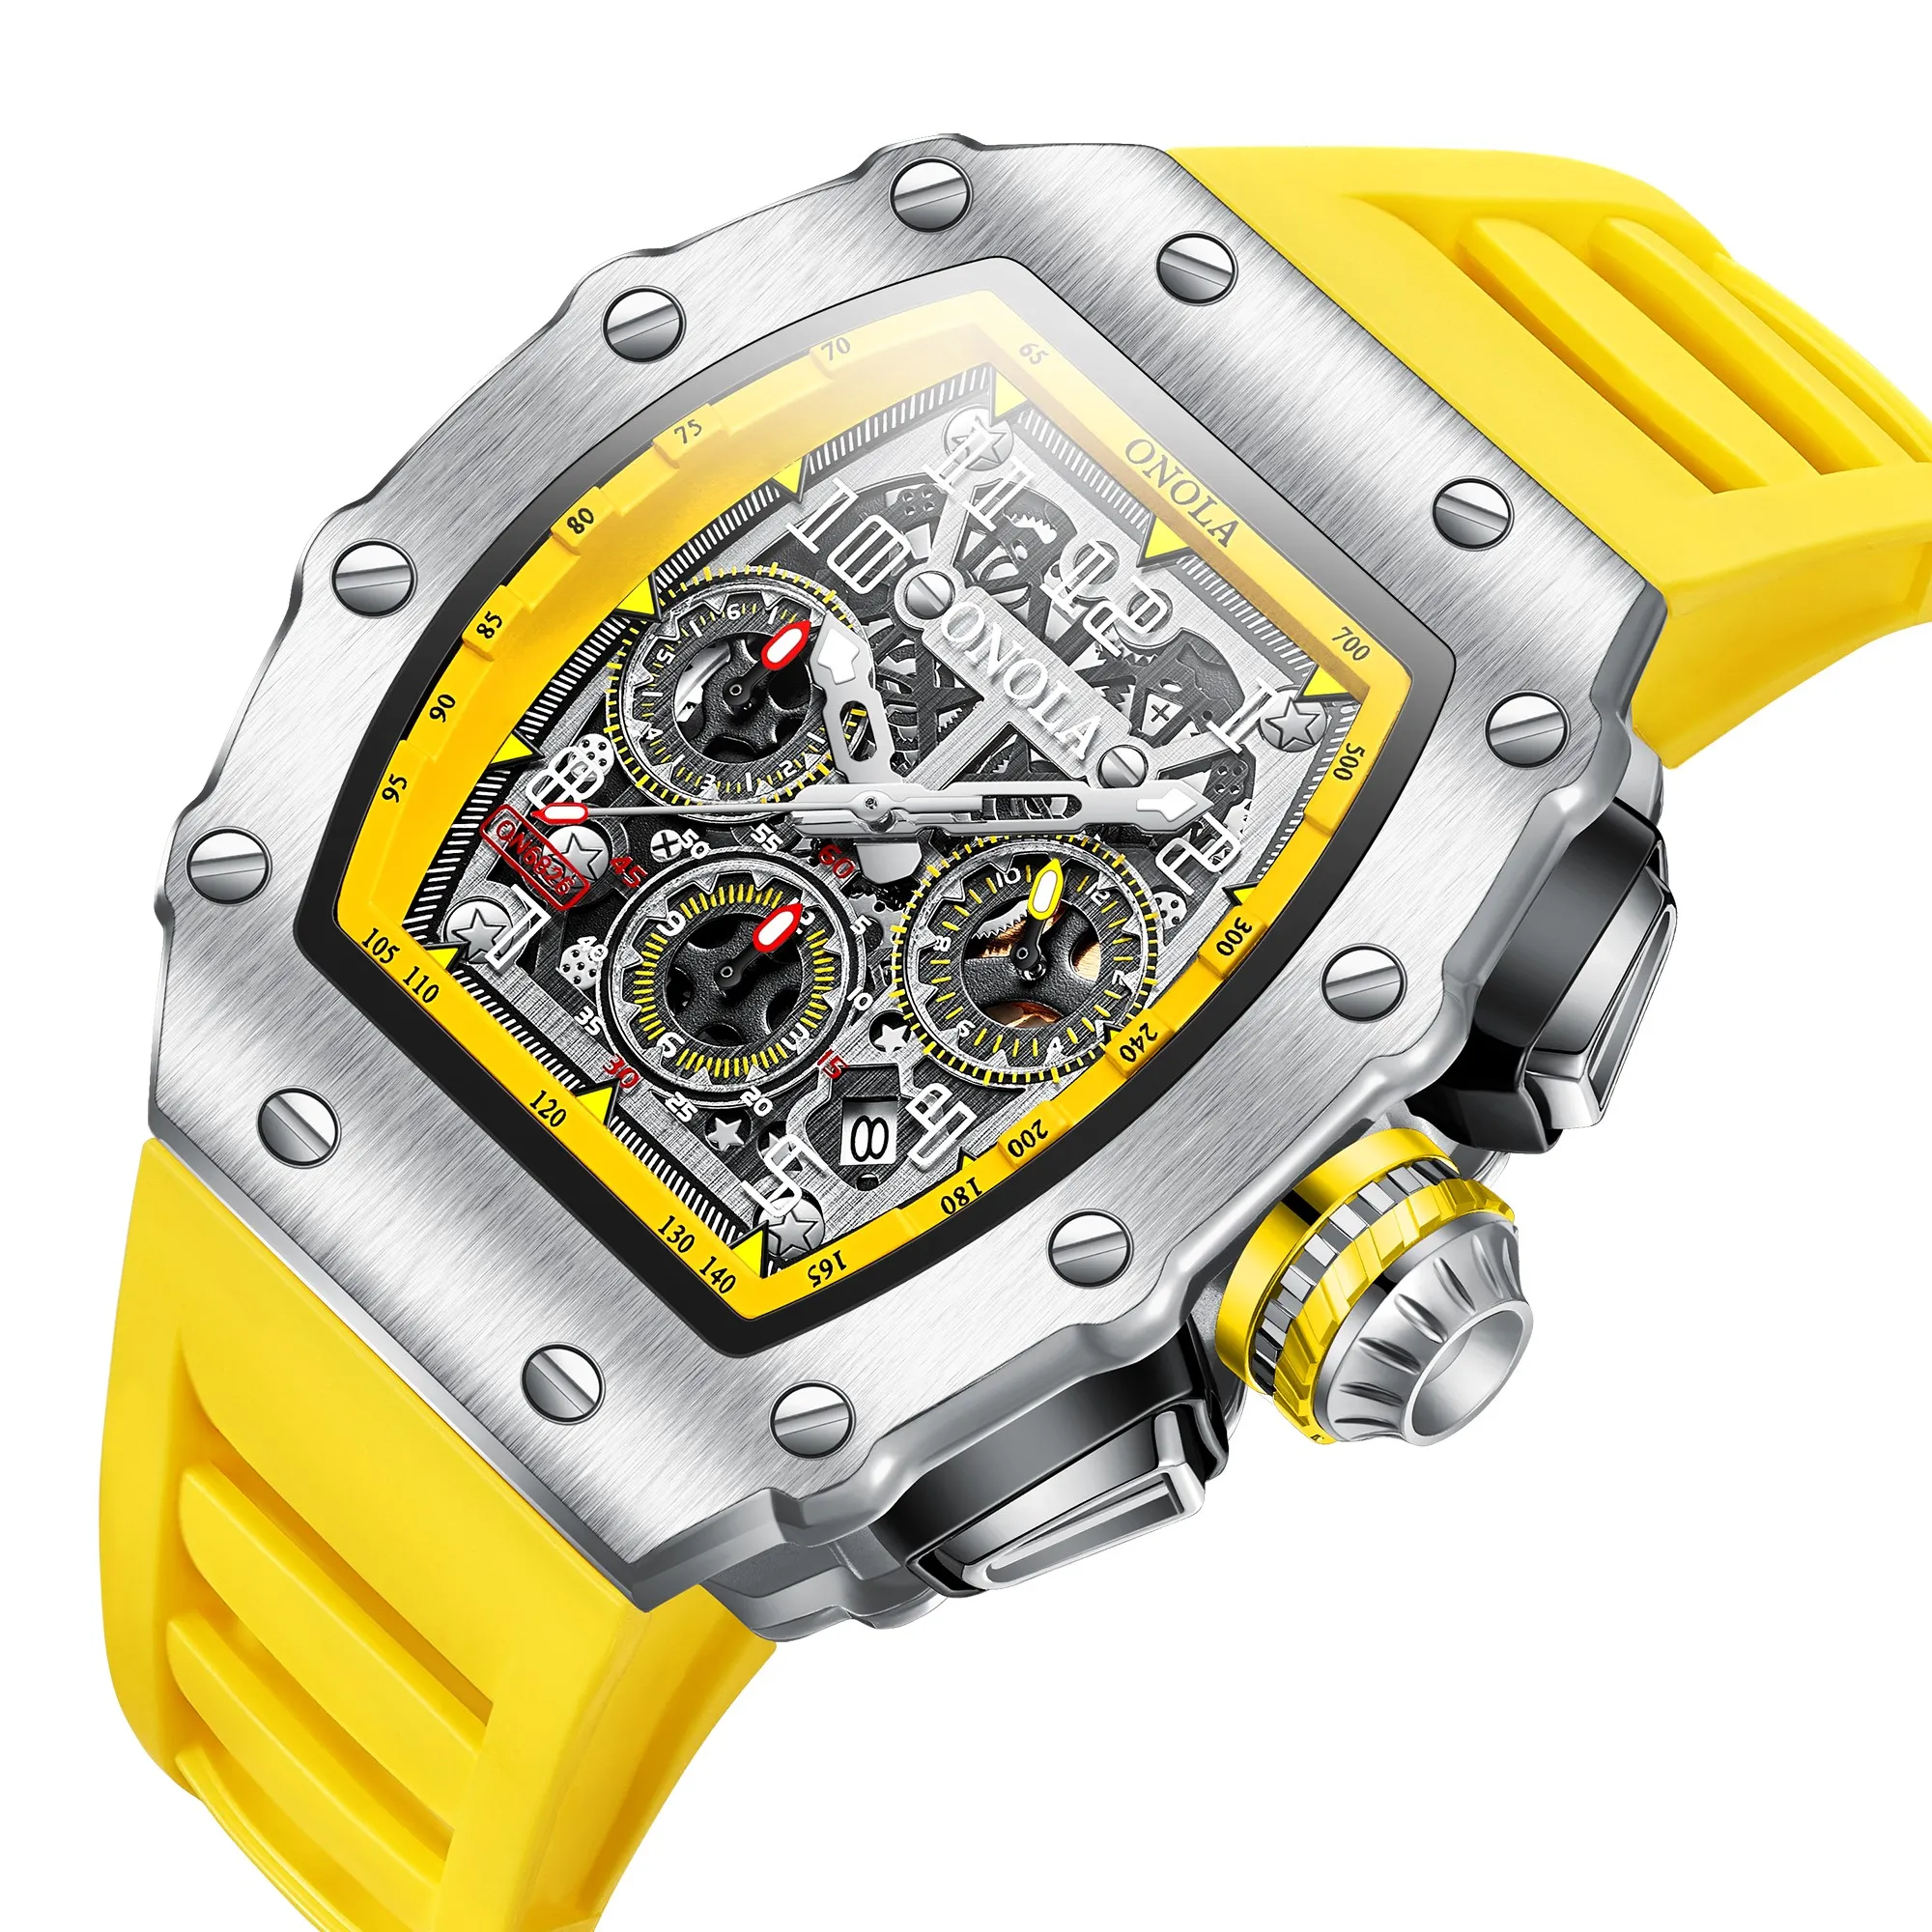 ONOLA Brand Luxury Watch Men Wrist Watches Multifunction Sports Waterproof Luminous Sports Casual Clock Men Quartz Watches Men